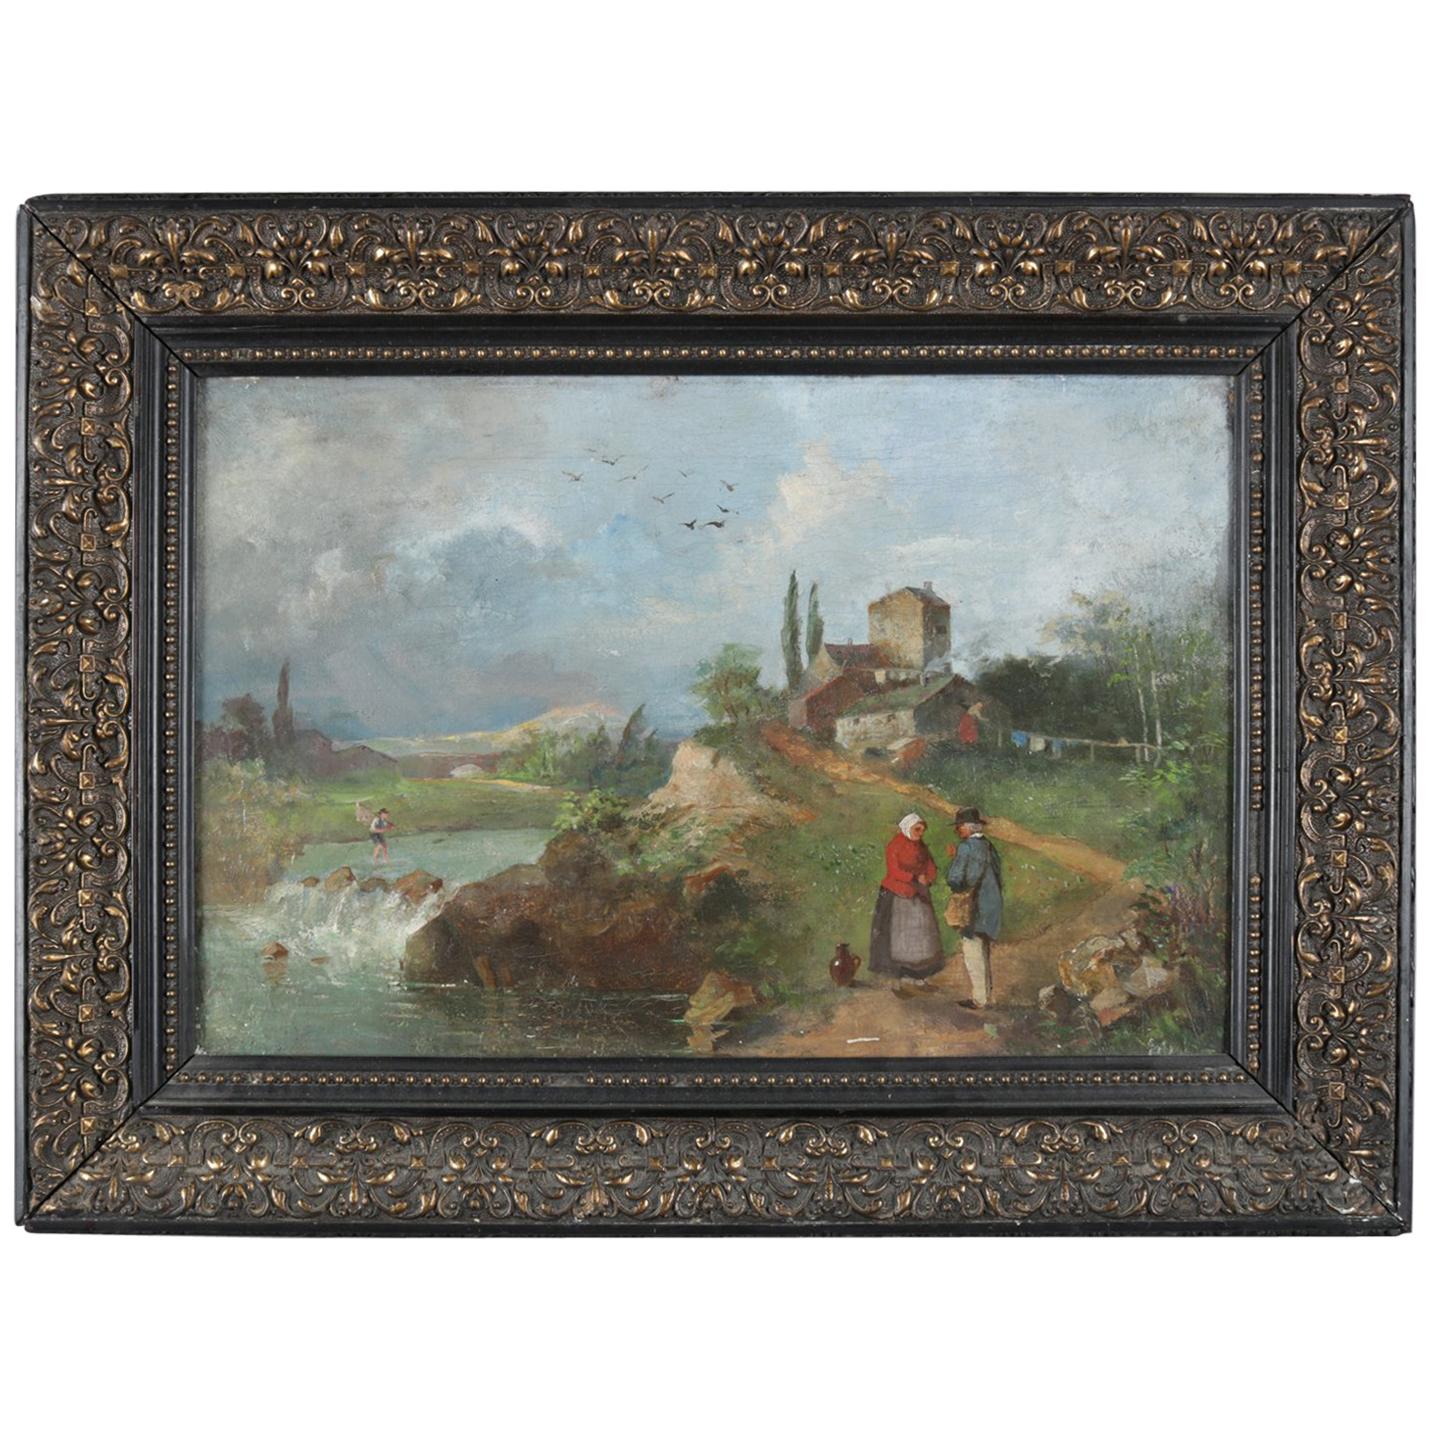 Antique Oil on Canvas Landscape Painting with Farm & Figures, 19th Century